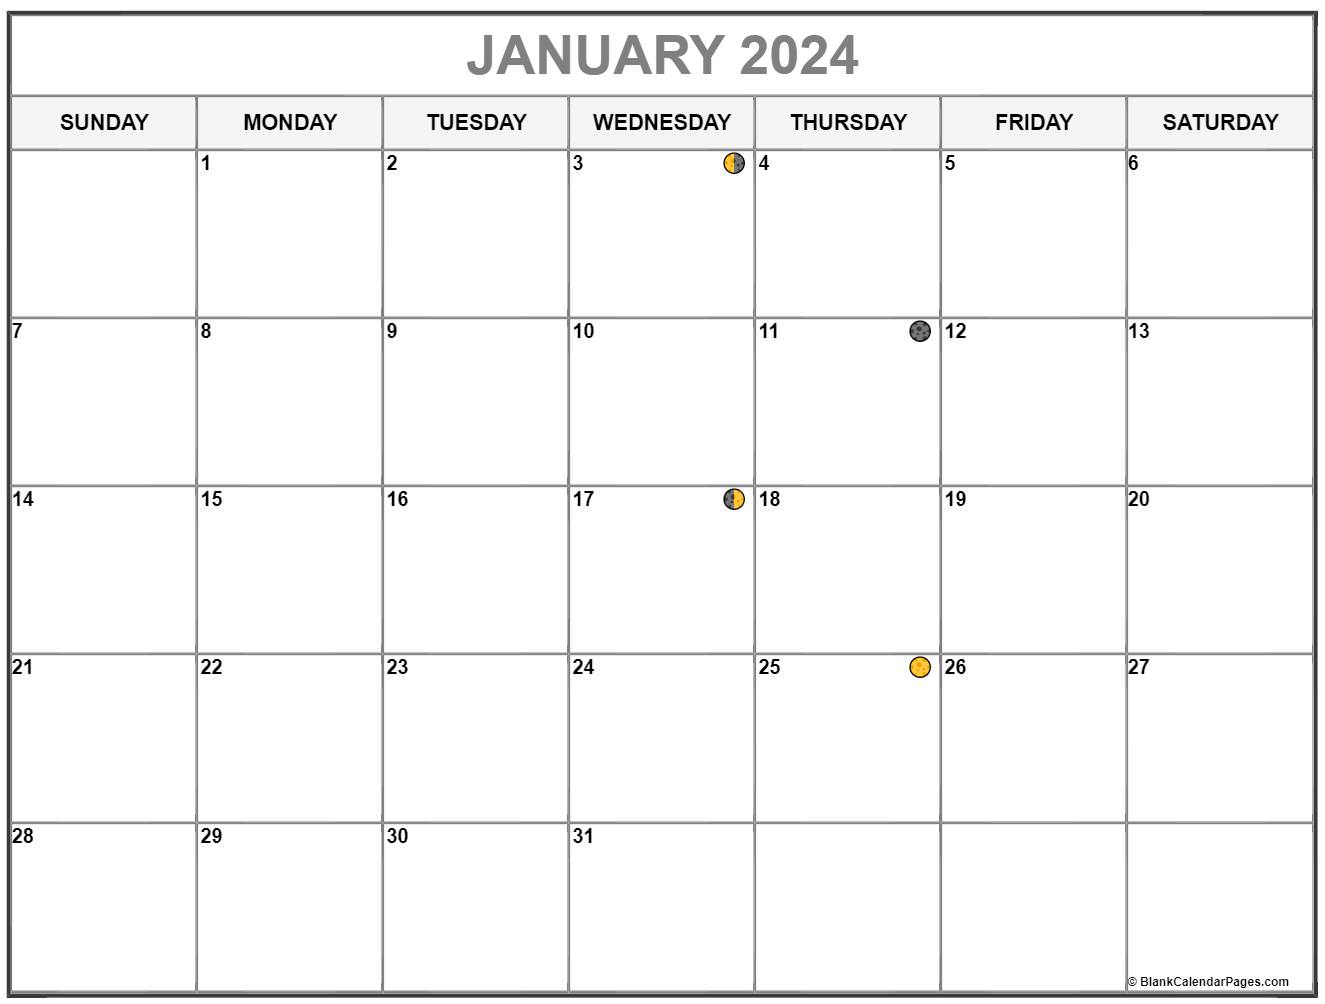 Moon Phase Calendar November 2022 January 2022 Lunar Calendar | Moon Phase Calendar